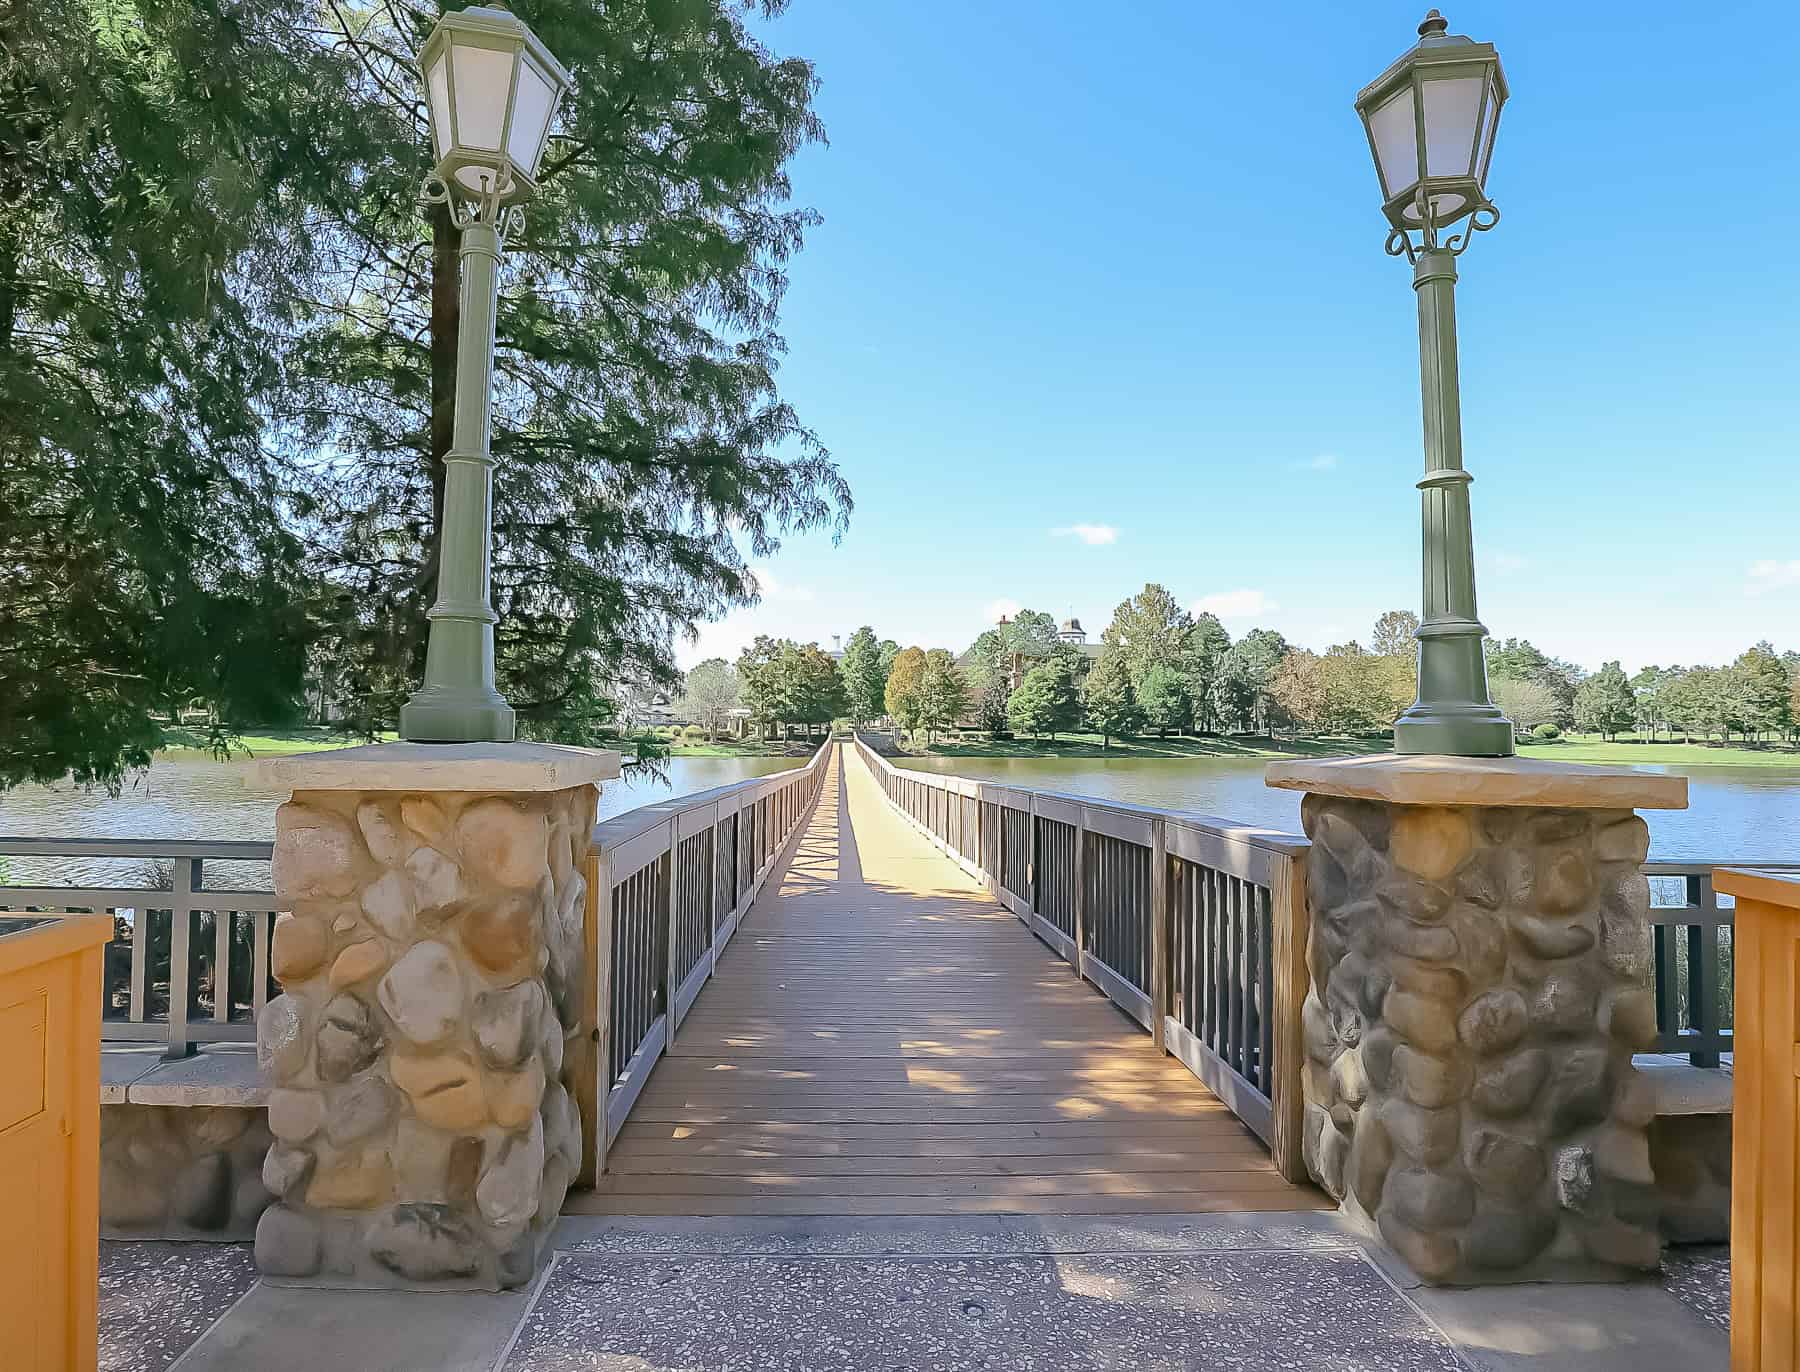 Disney's Saratoga Springs bridge across portion of the resort